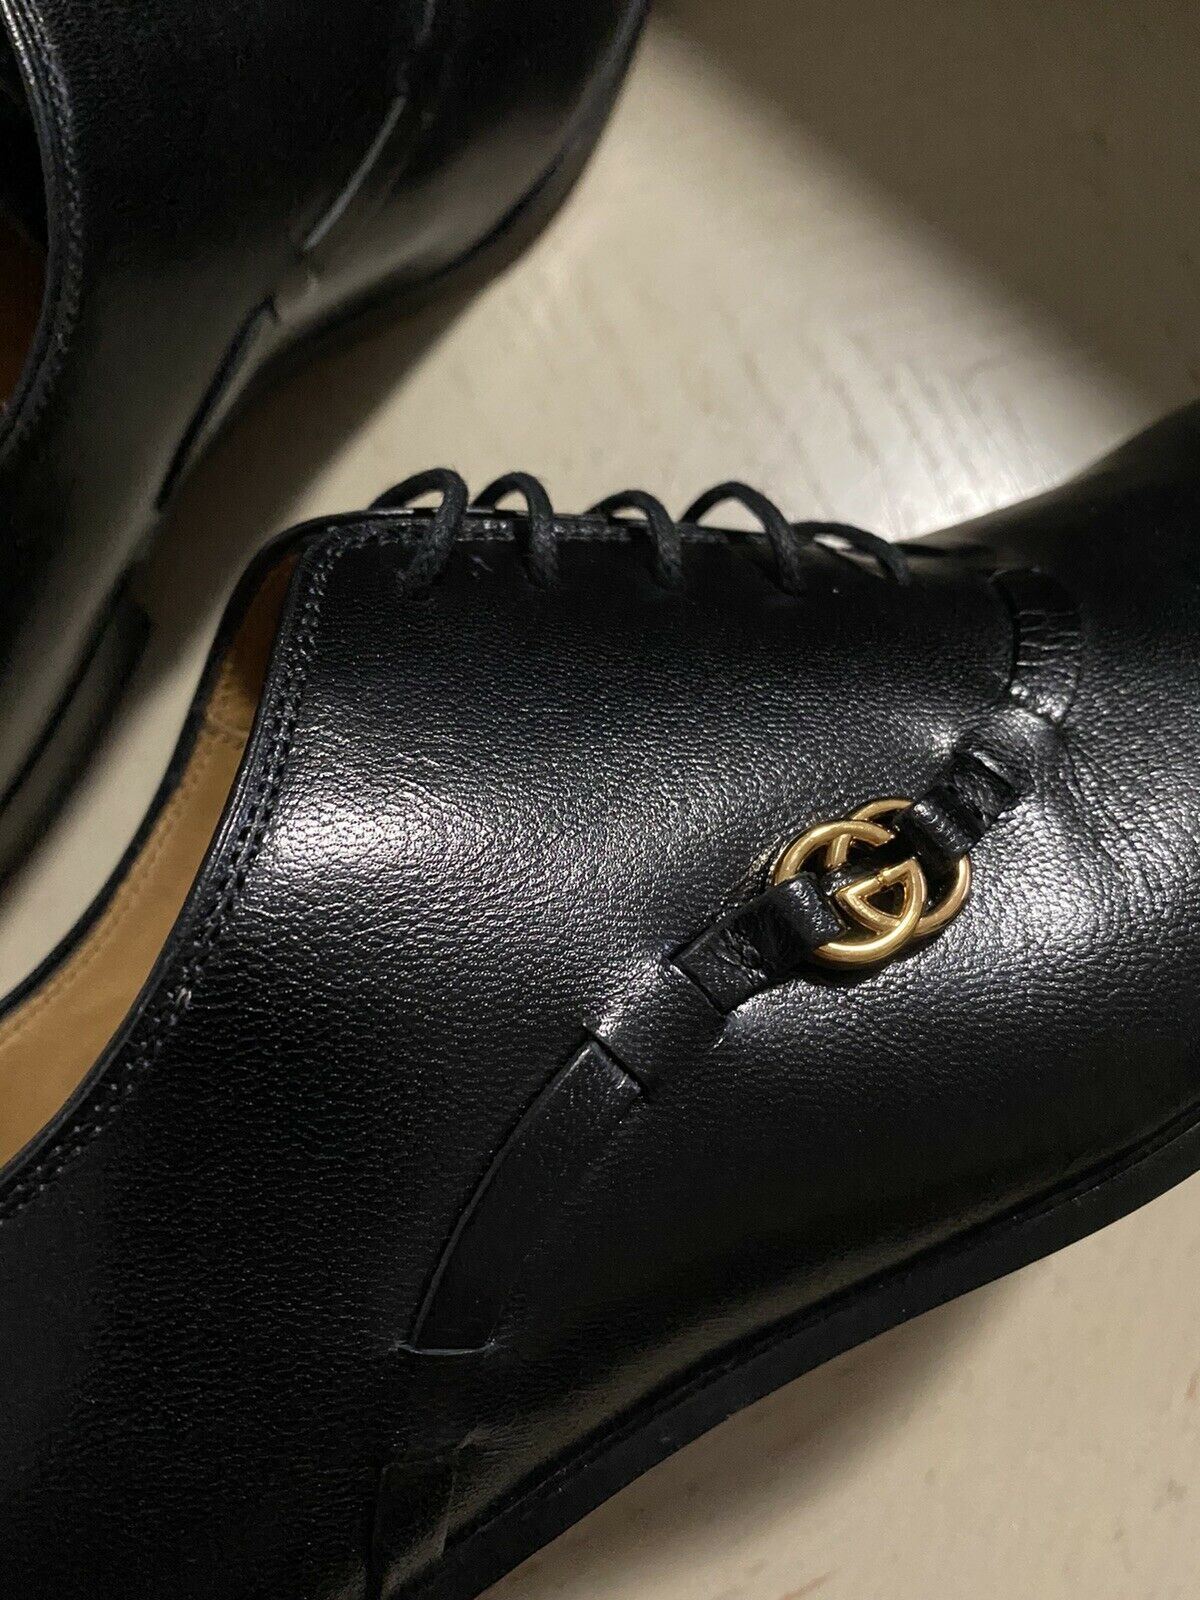 New $1600 Gucci Men’s GG Monogram Leather Dress Shoes Black 11.5 US ( 10.5 Eu )